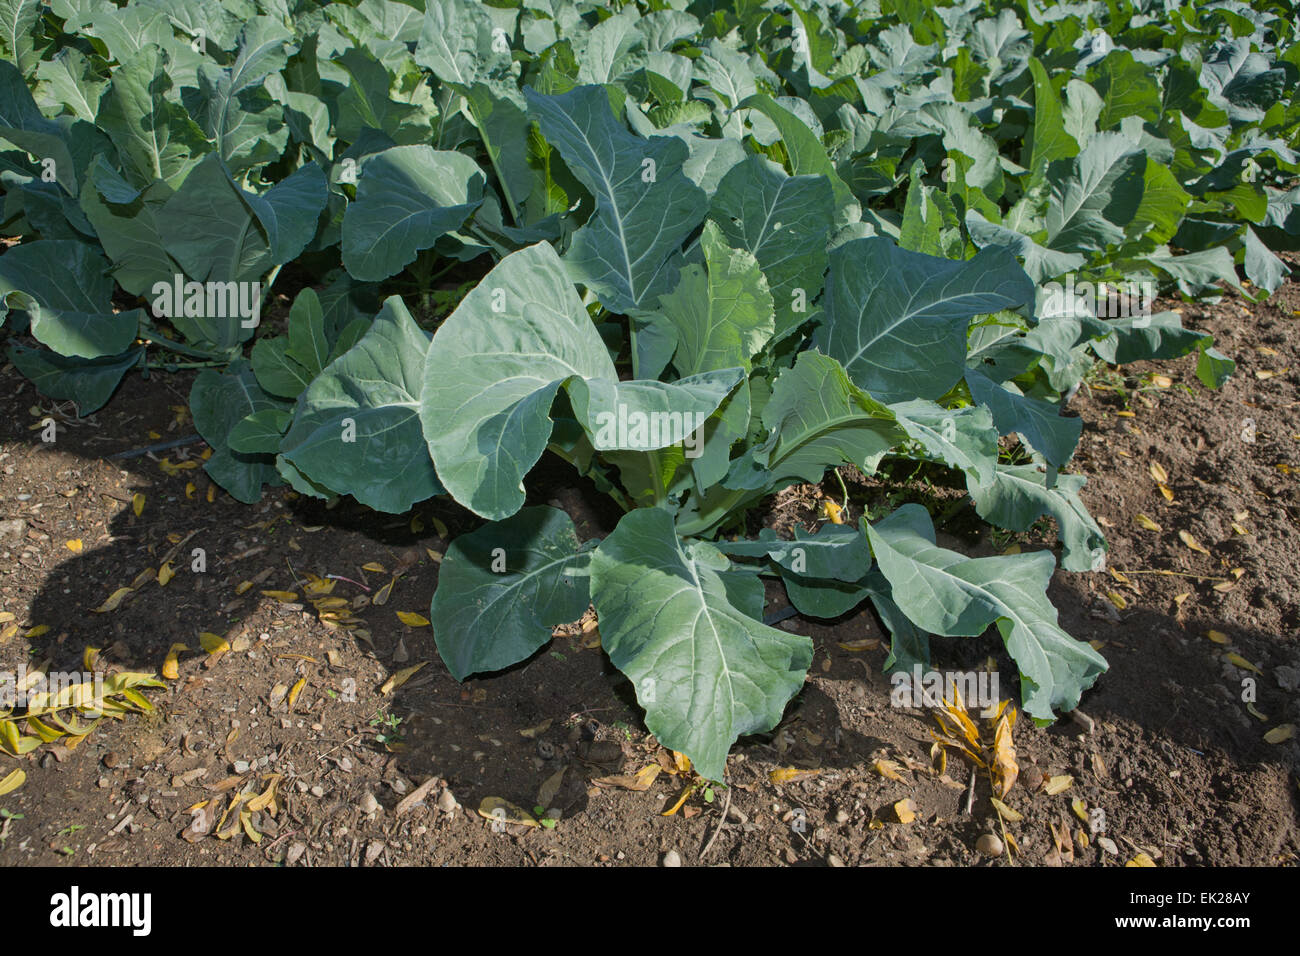 Green cabbage or Brassica oleracea, on vegetable garden bed Stock Photo